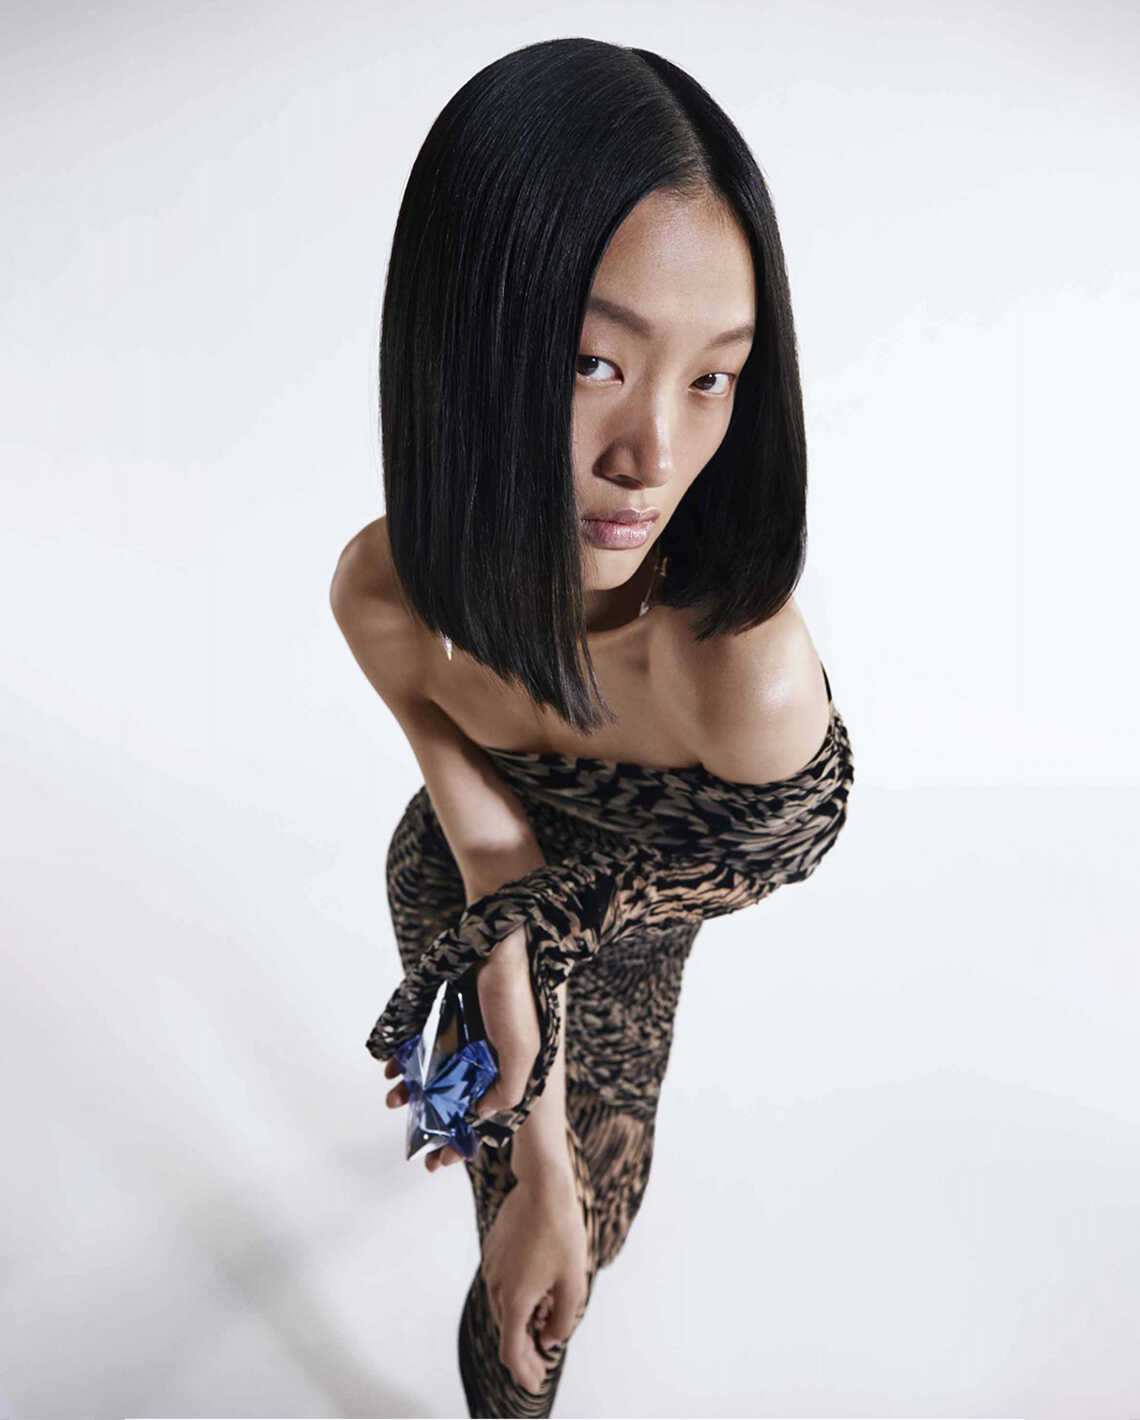 Model in sleeveless leopard dress by Mugler